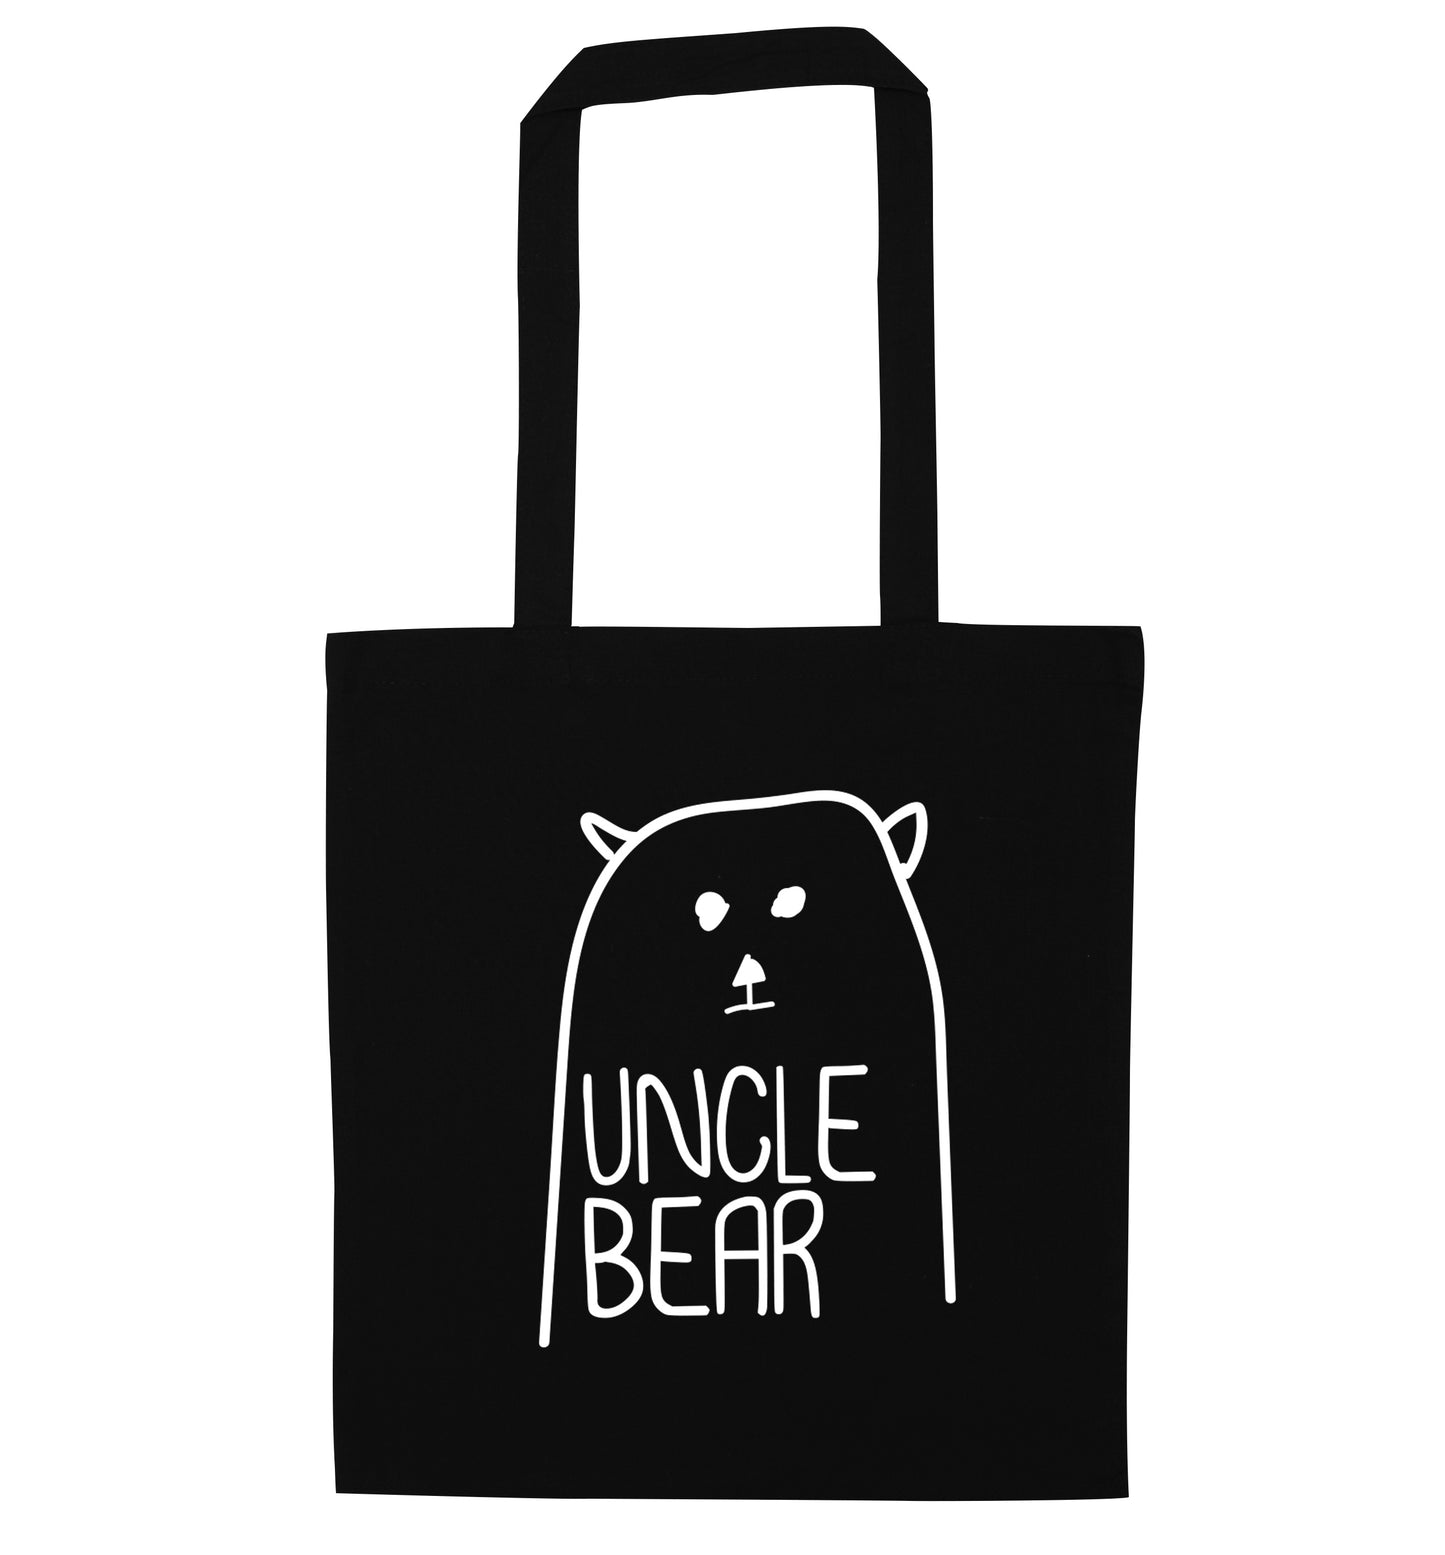 Uncle bear black tote bag